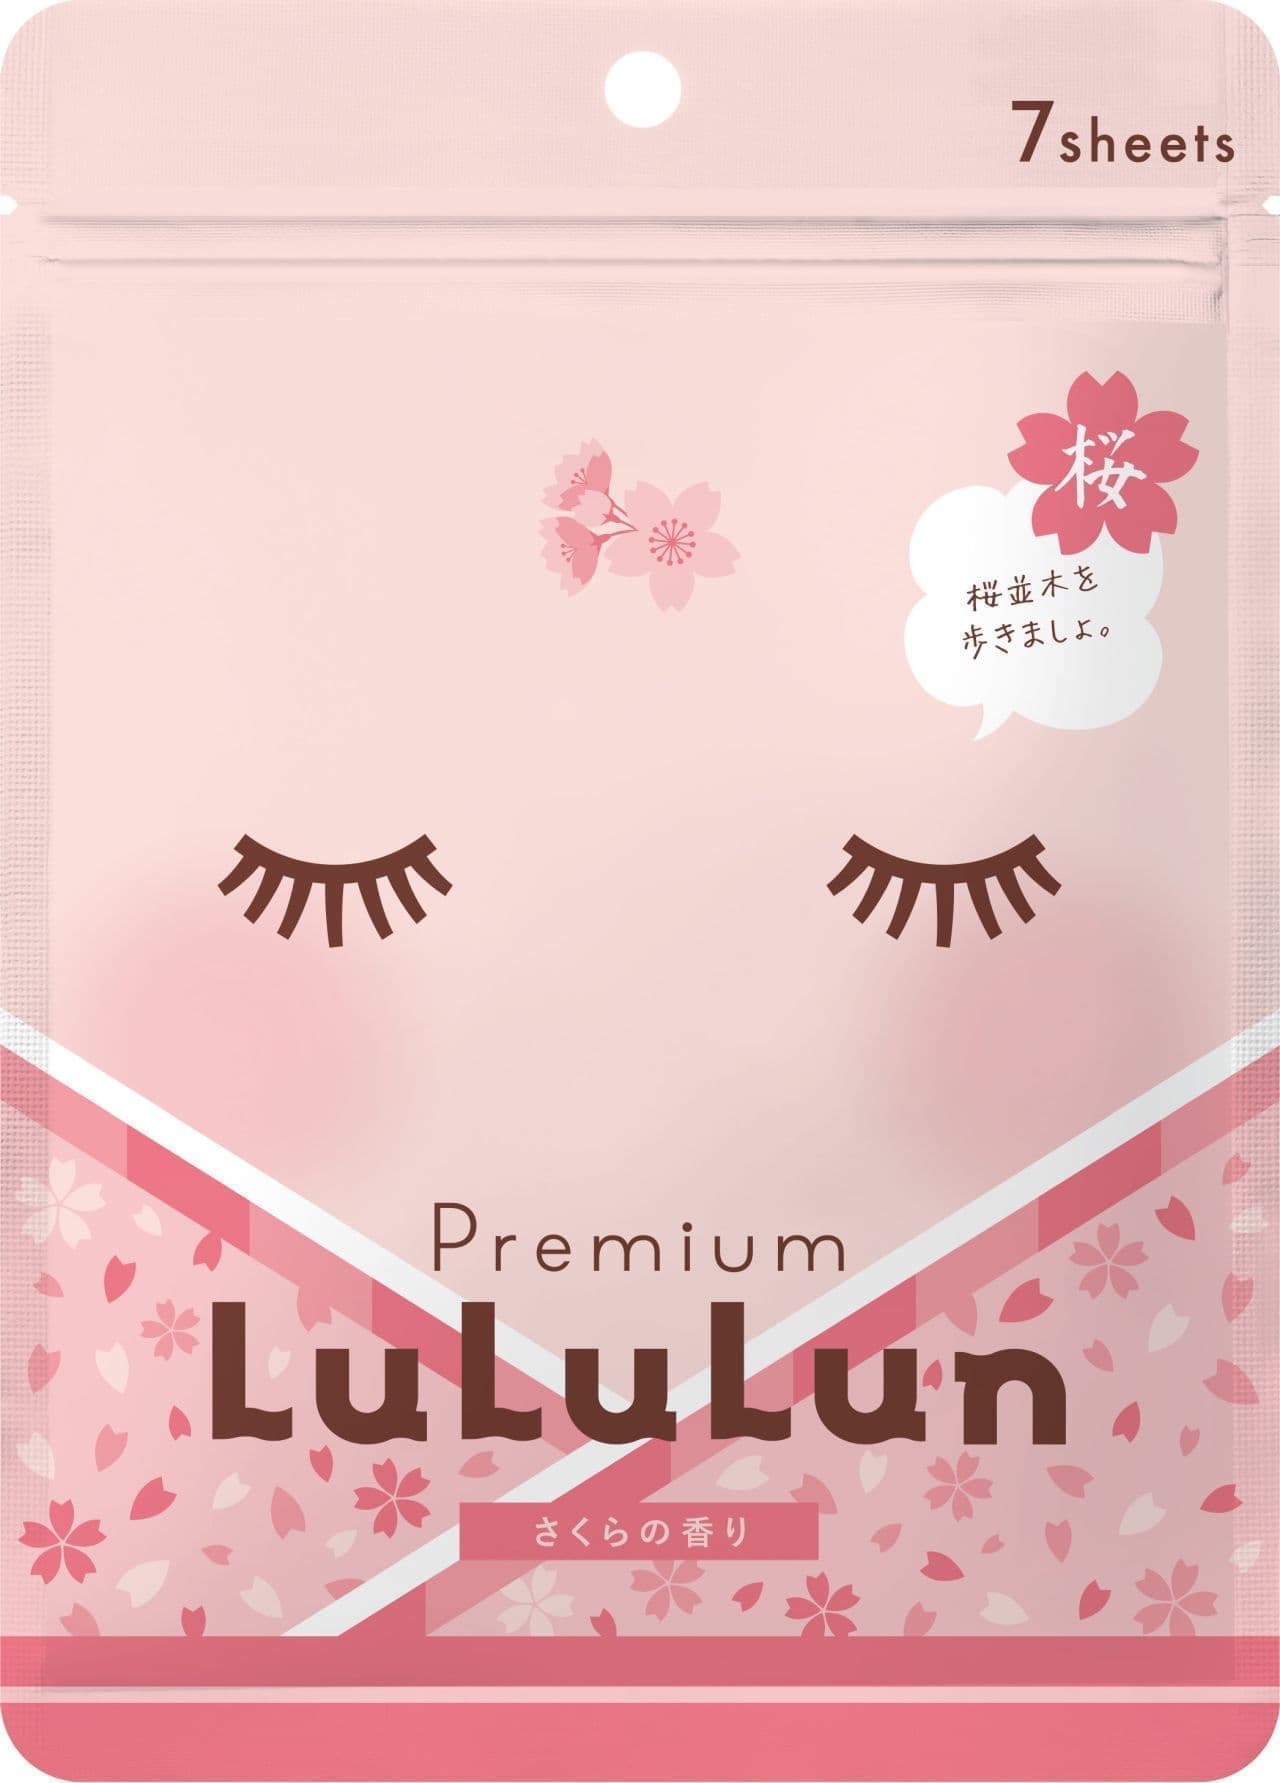 Spring Limited Premium Lululun Cherry Blossom (Sakura Scent)